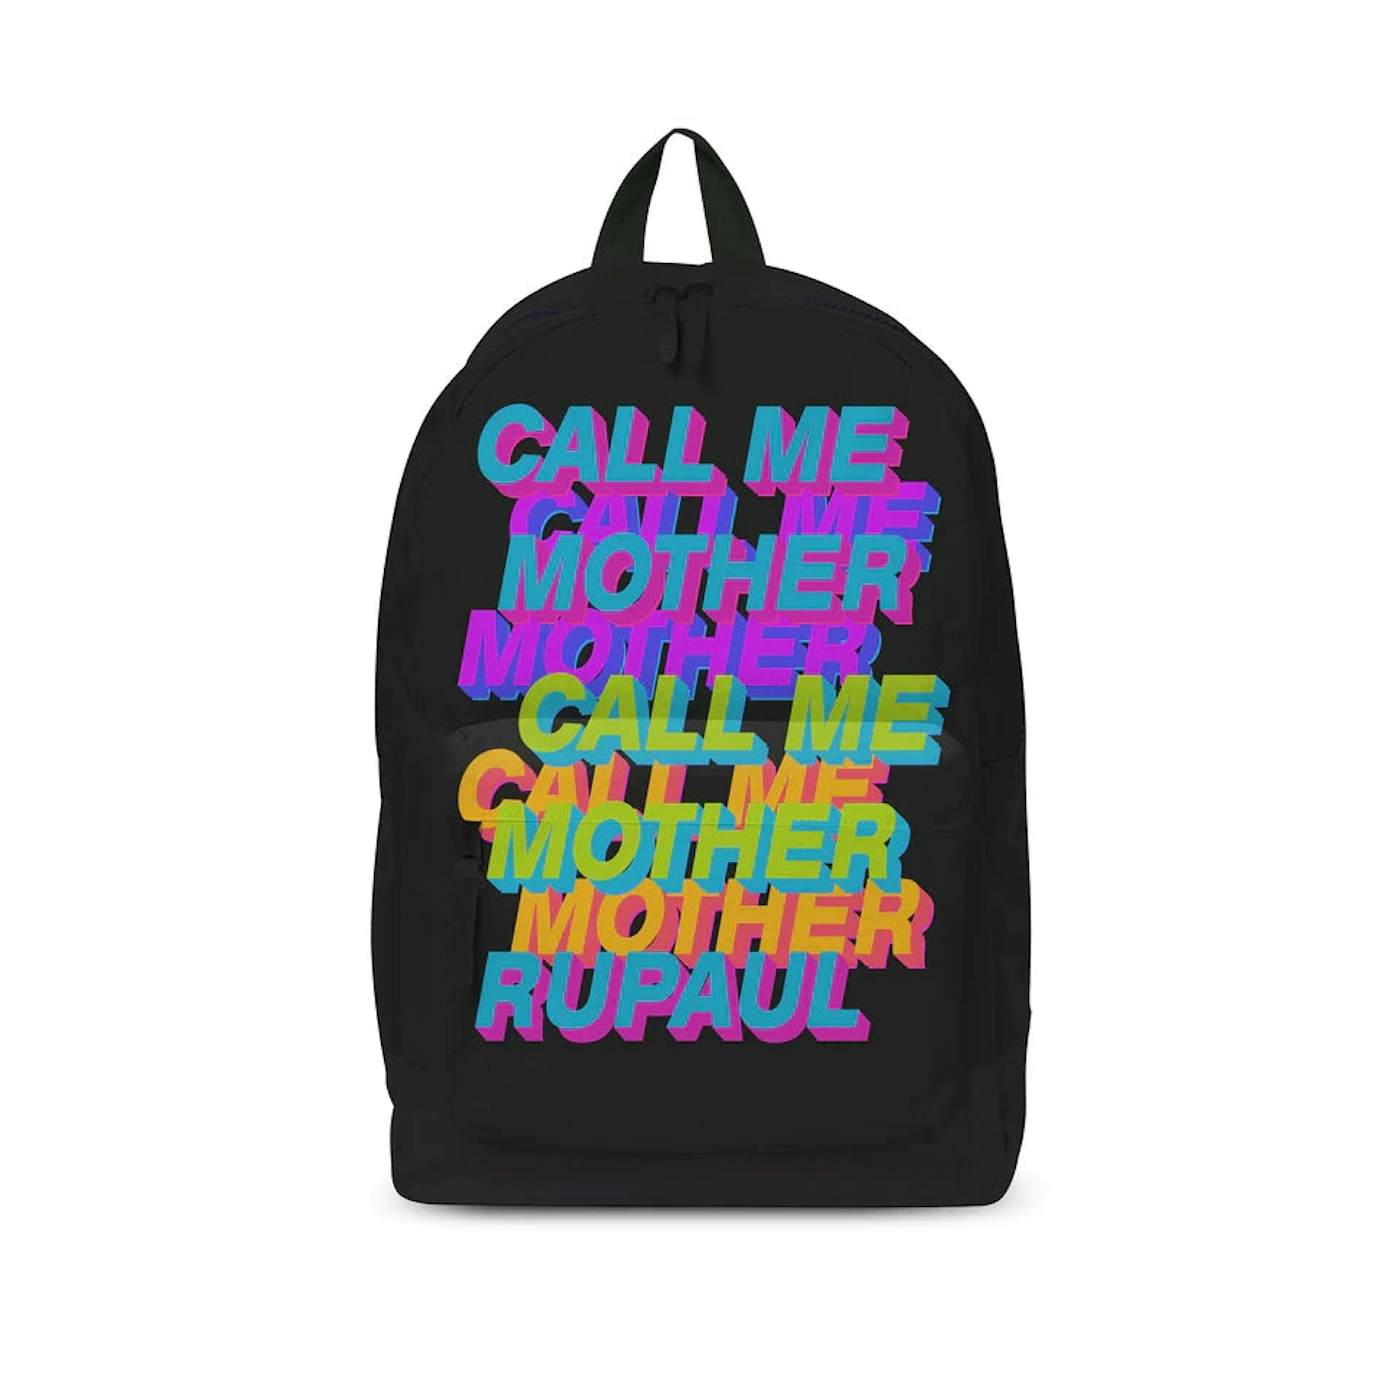 Rocksax RuPaul Backpack - Call Me Mother